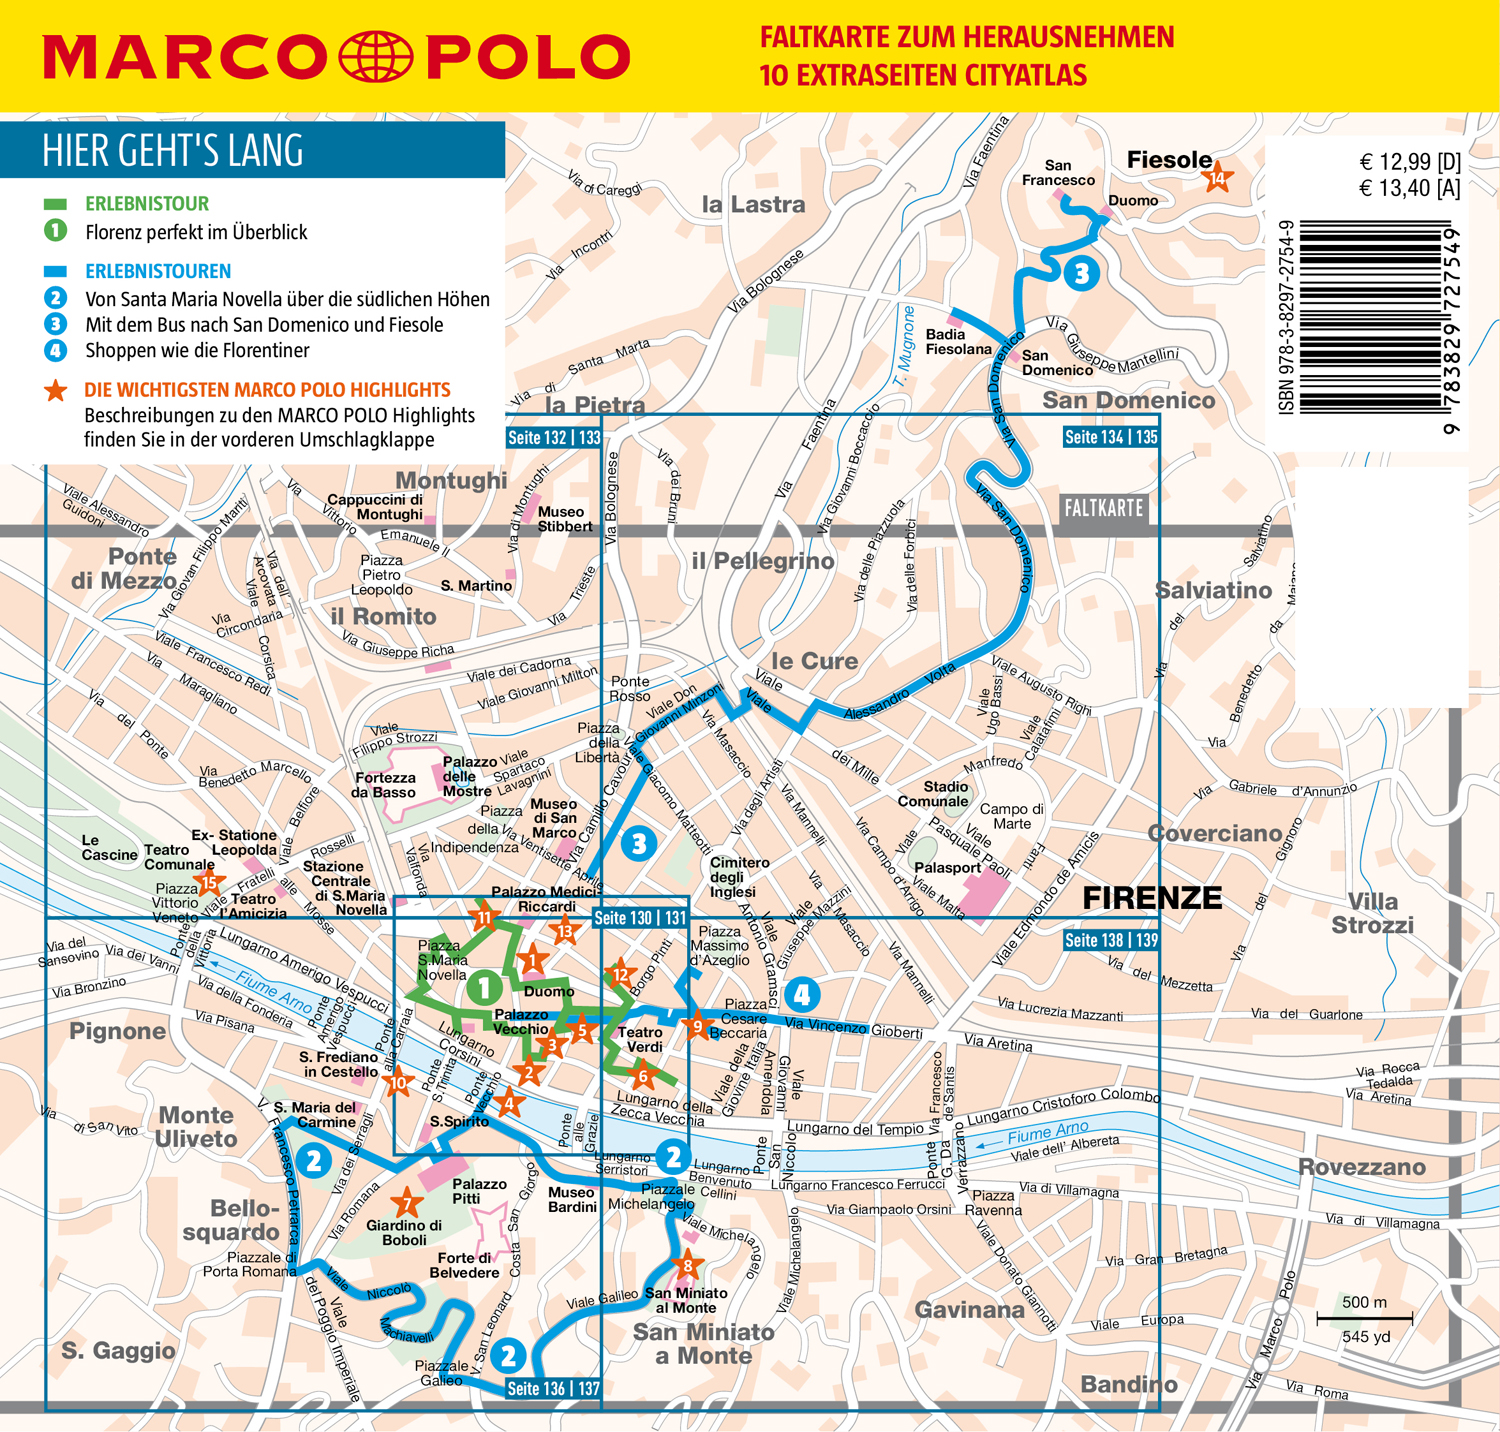 MARCO POLO Reiseführer Florenz